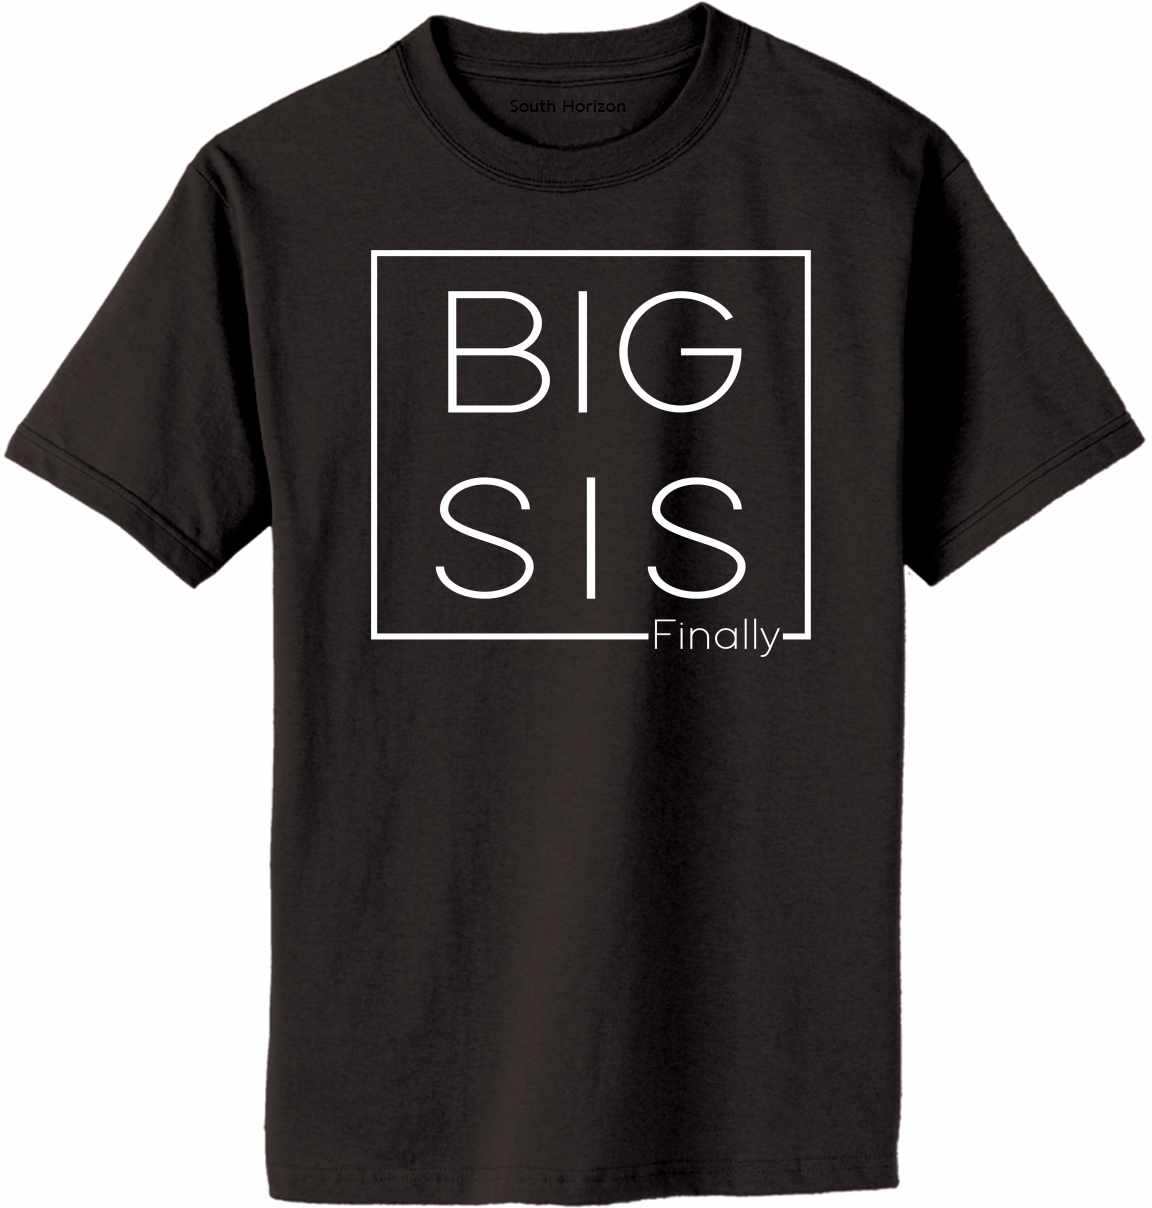 Big Sis Finally- Big Sister Boxed on Adult T-Shirt (#1313-1)